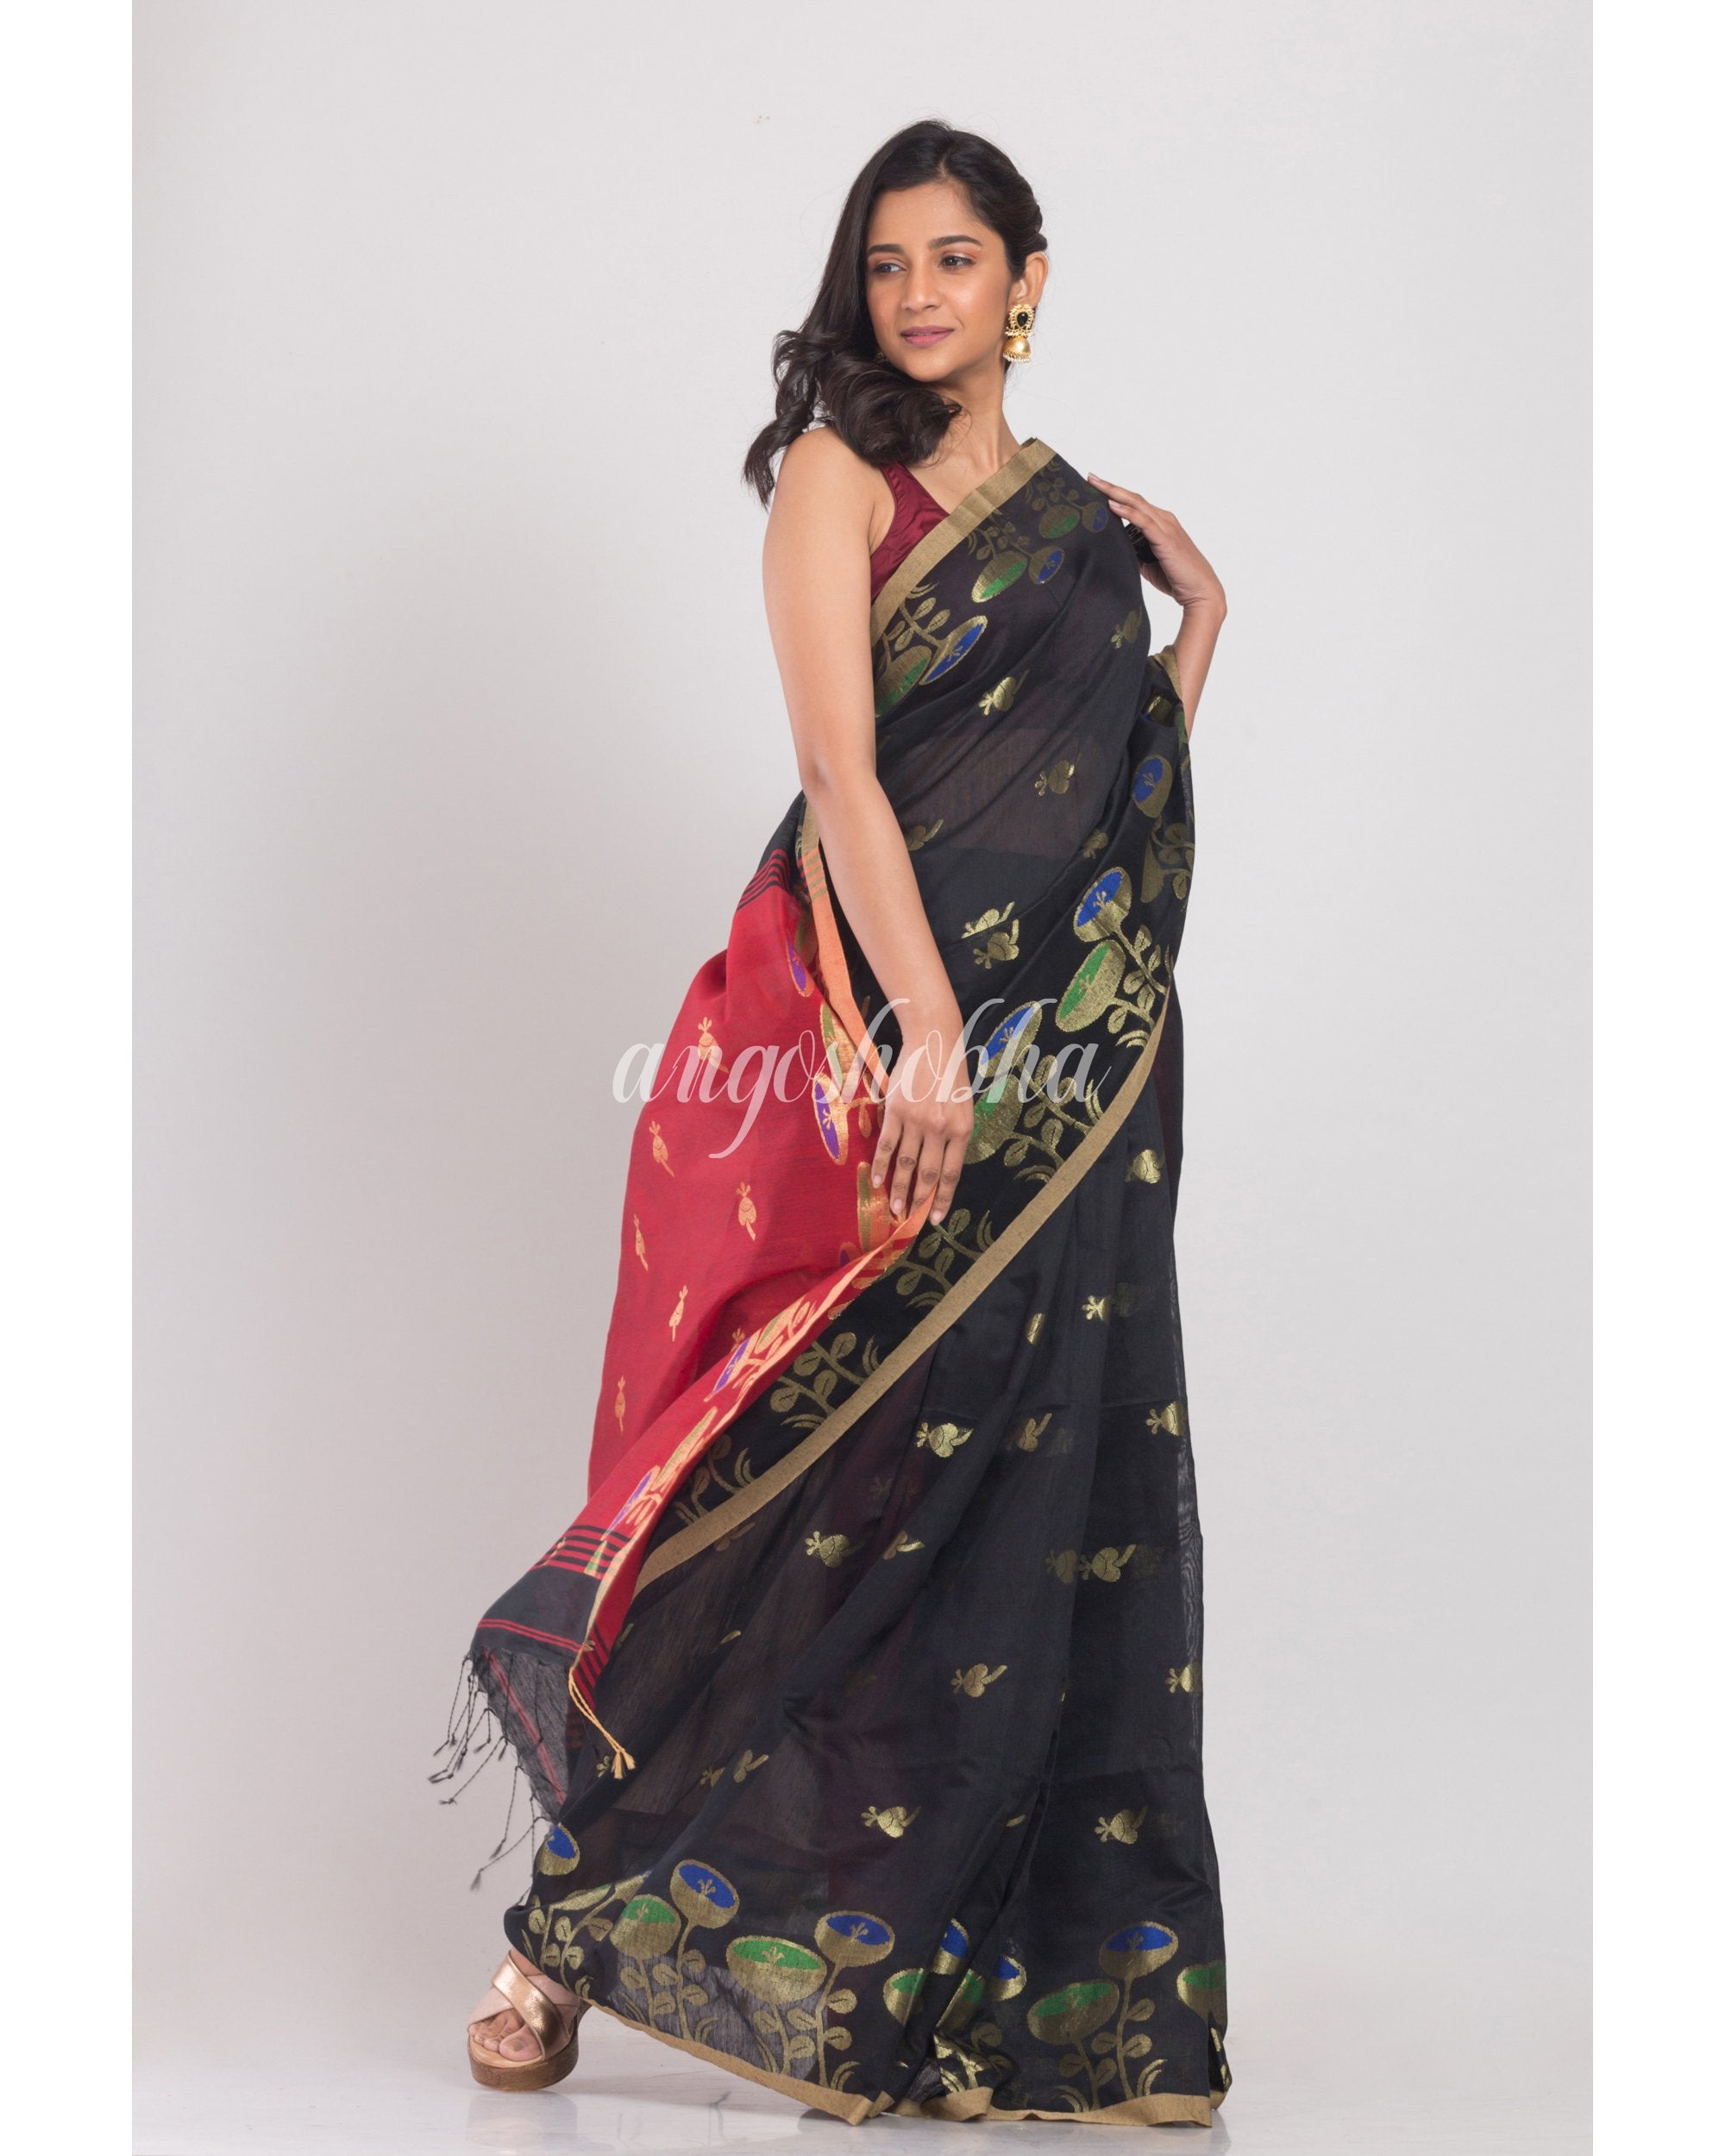 Women's Black Handloom Cotton Silk Saree - Angoshobha